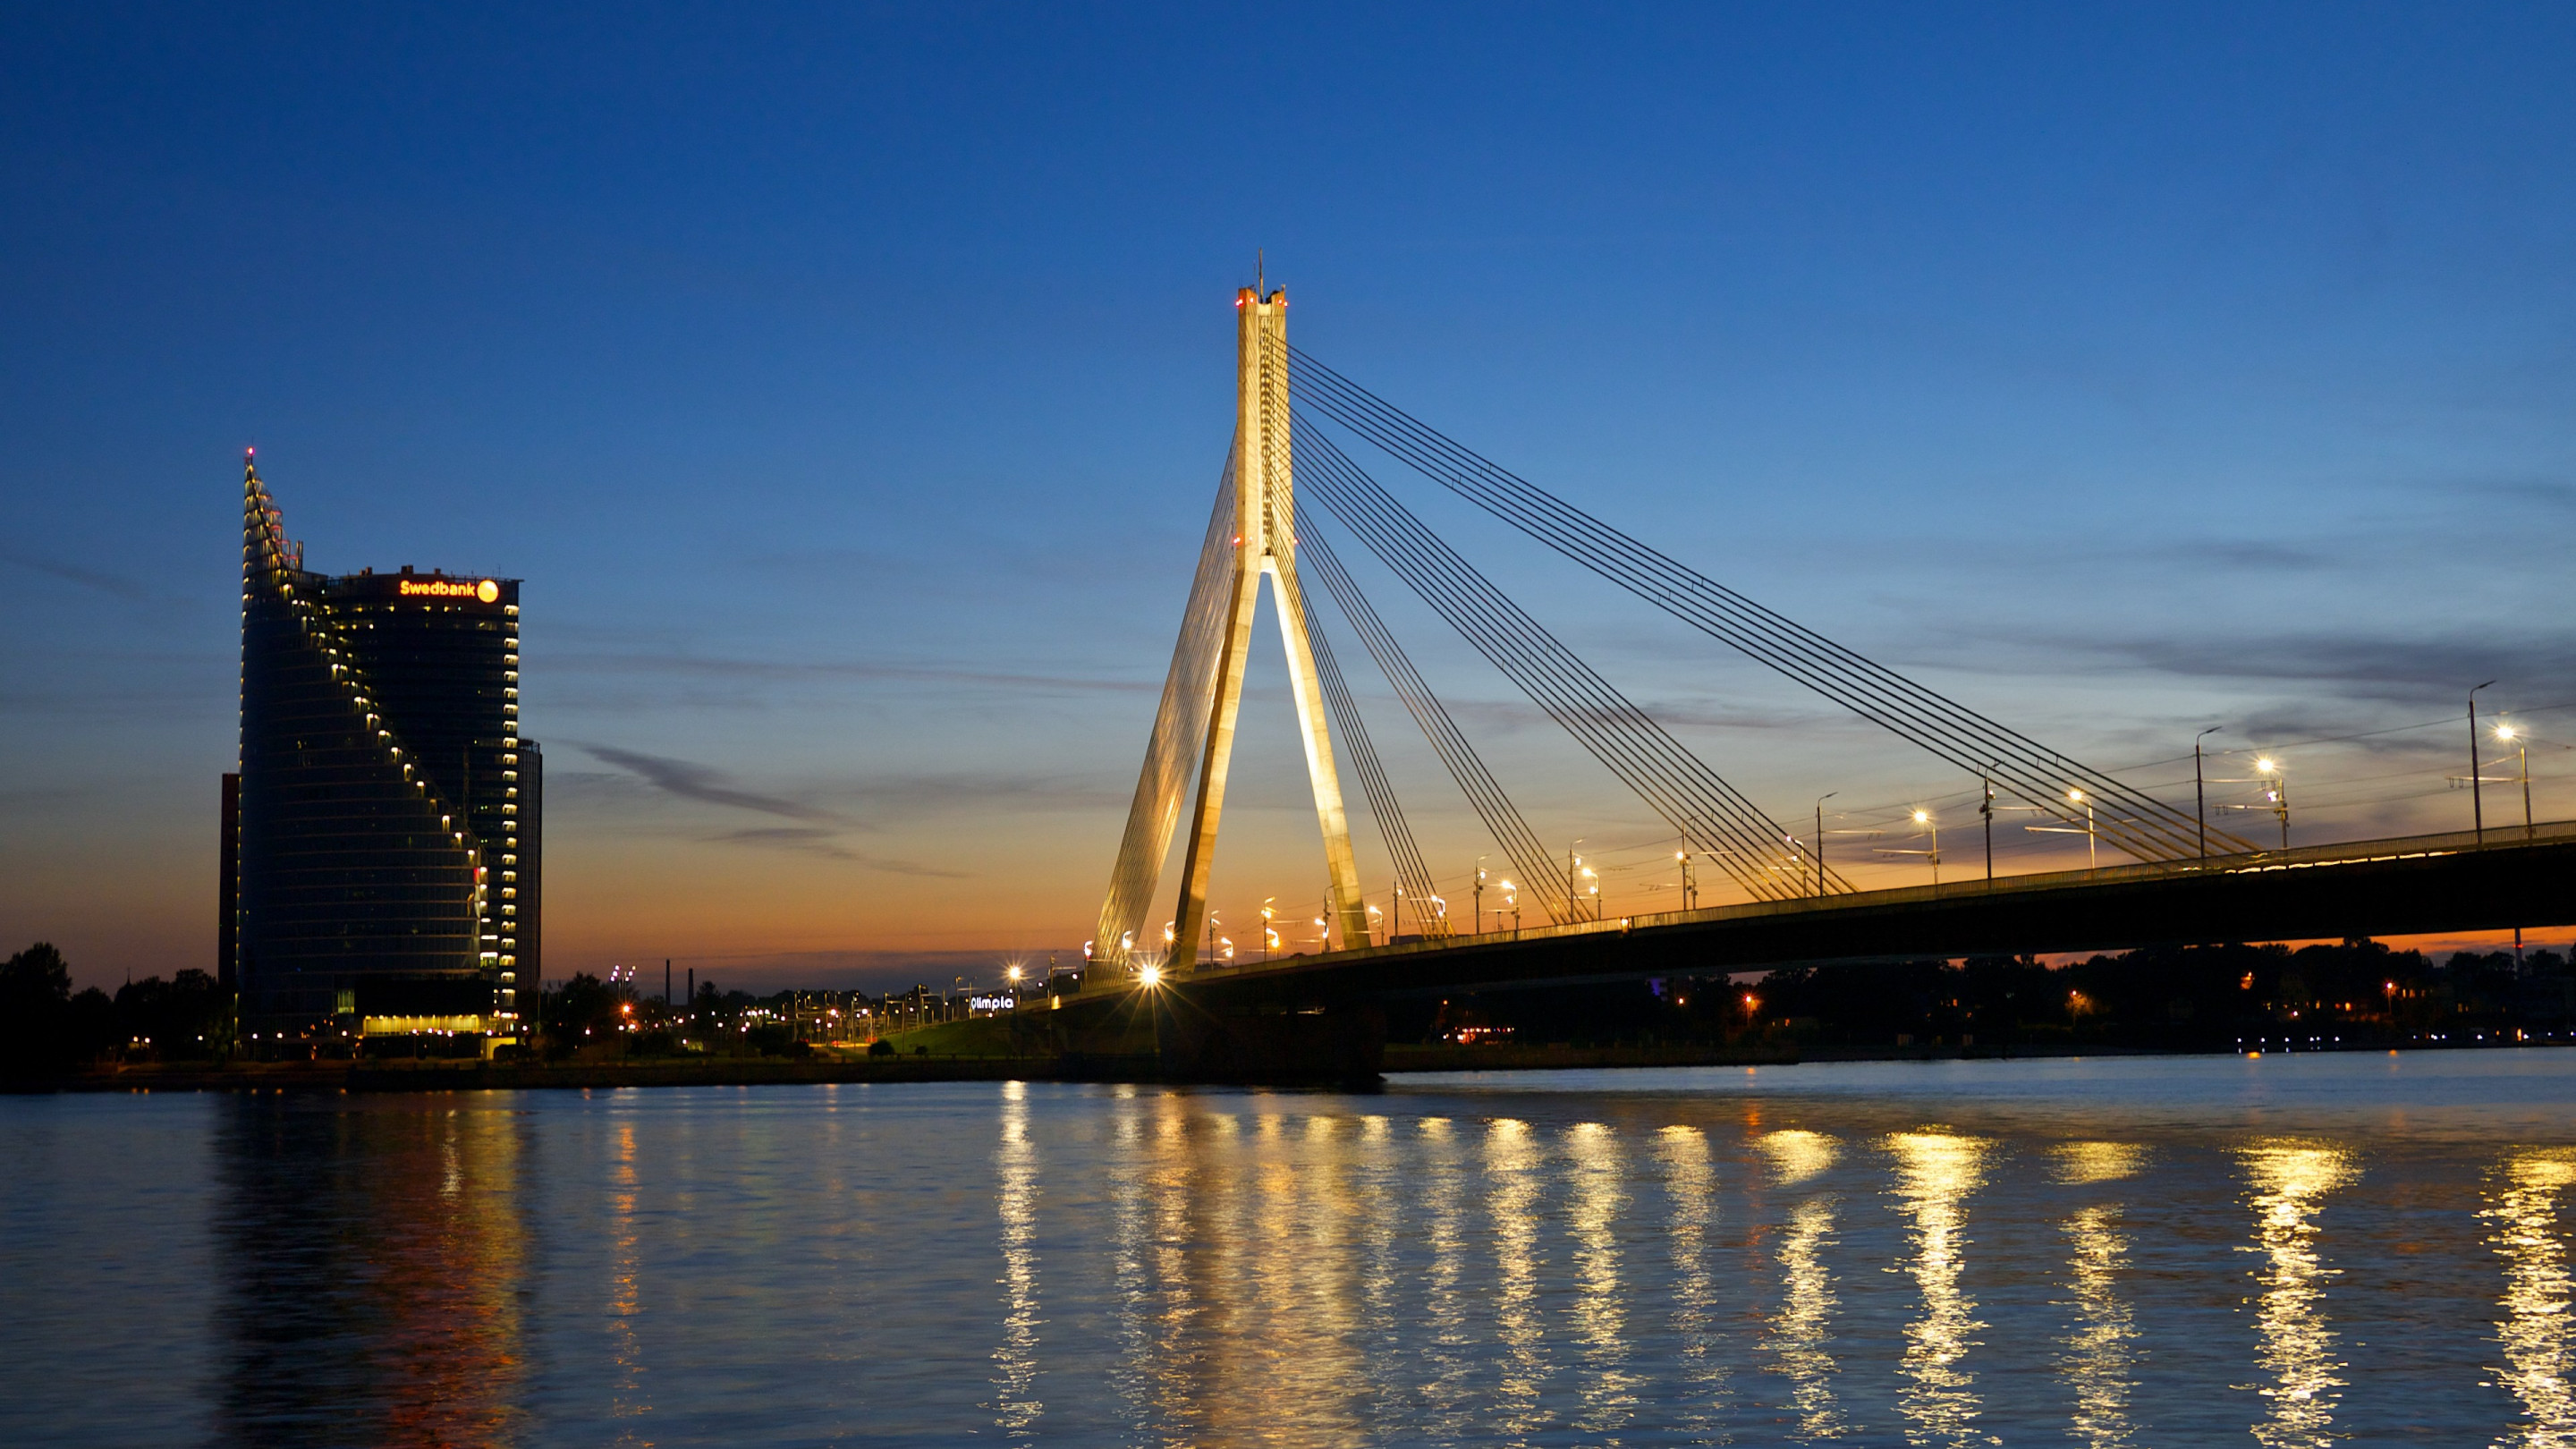 Bridge at sunset from Riga wallpaper 2880x1620